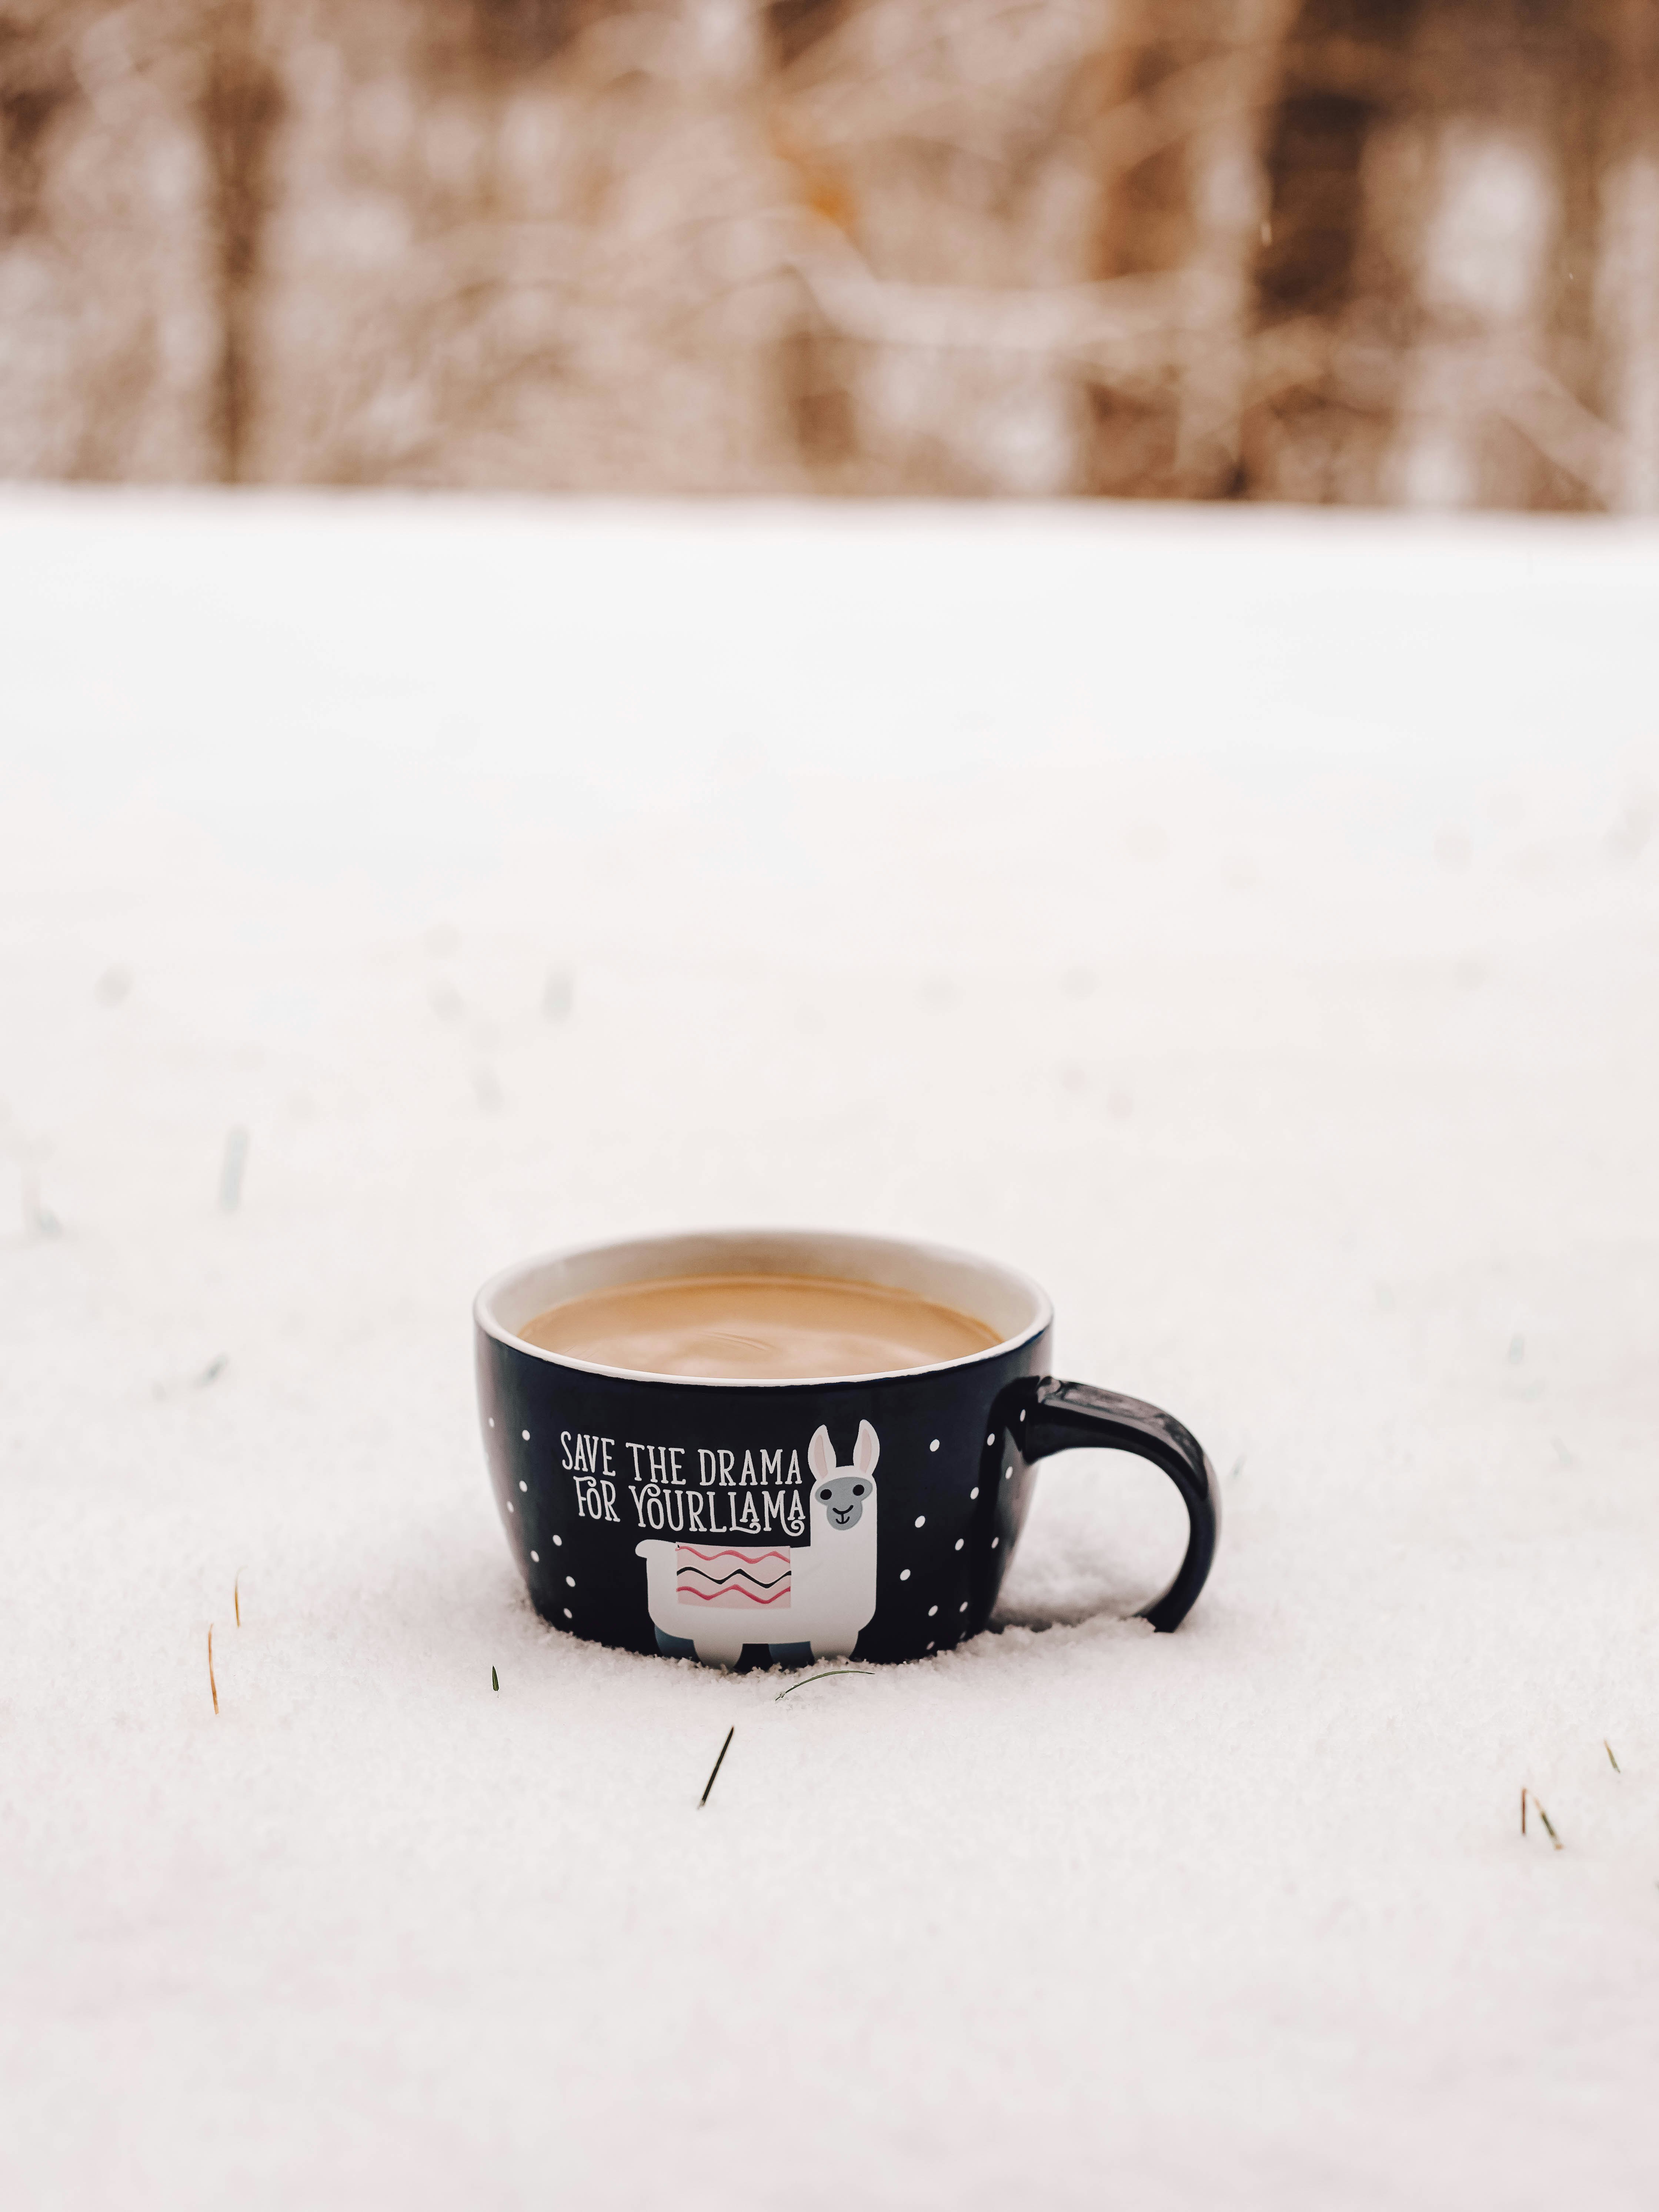 white and black ceramic mug on snow covered ground